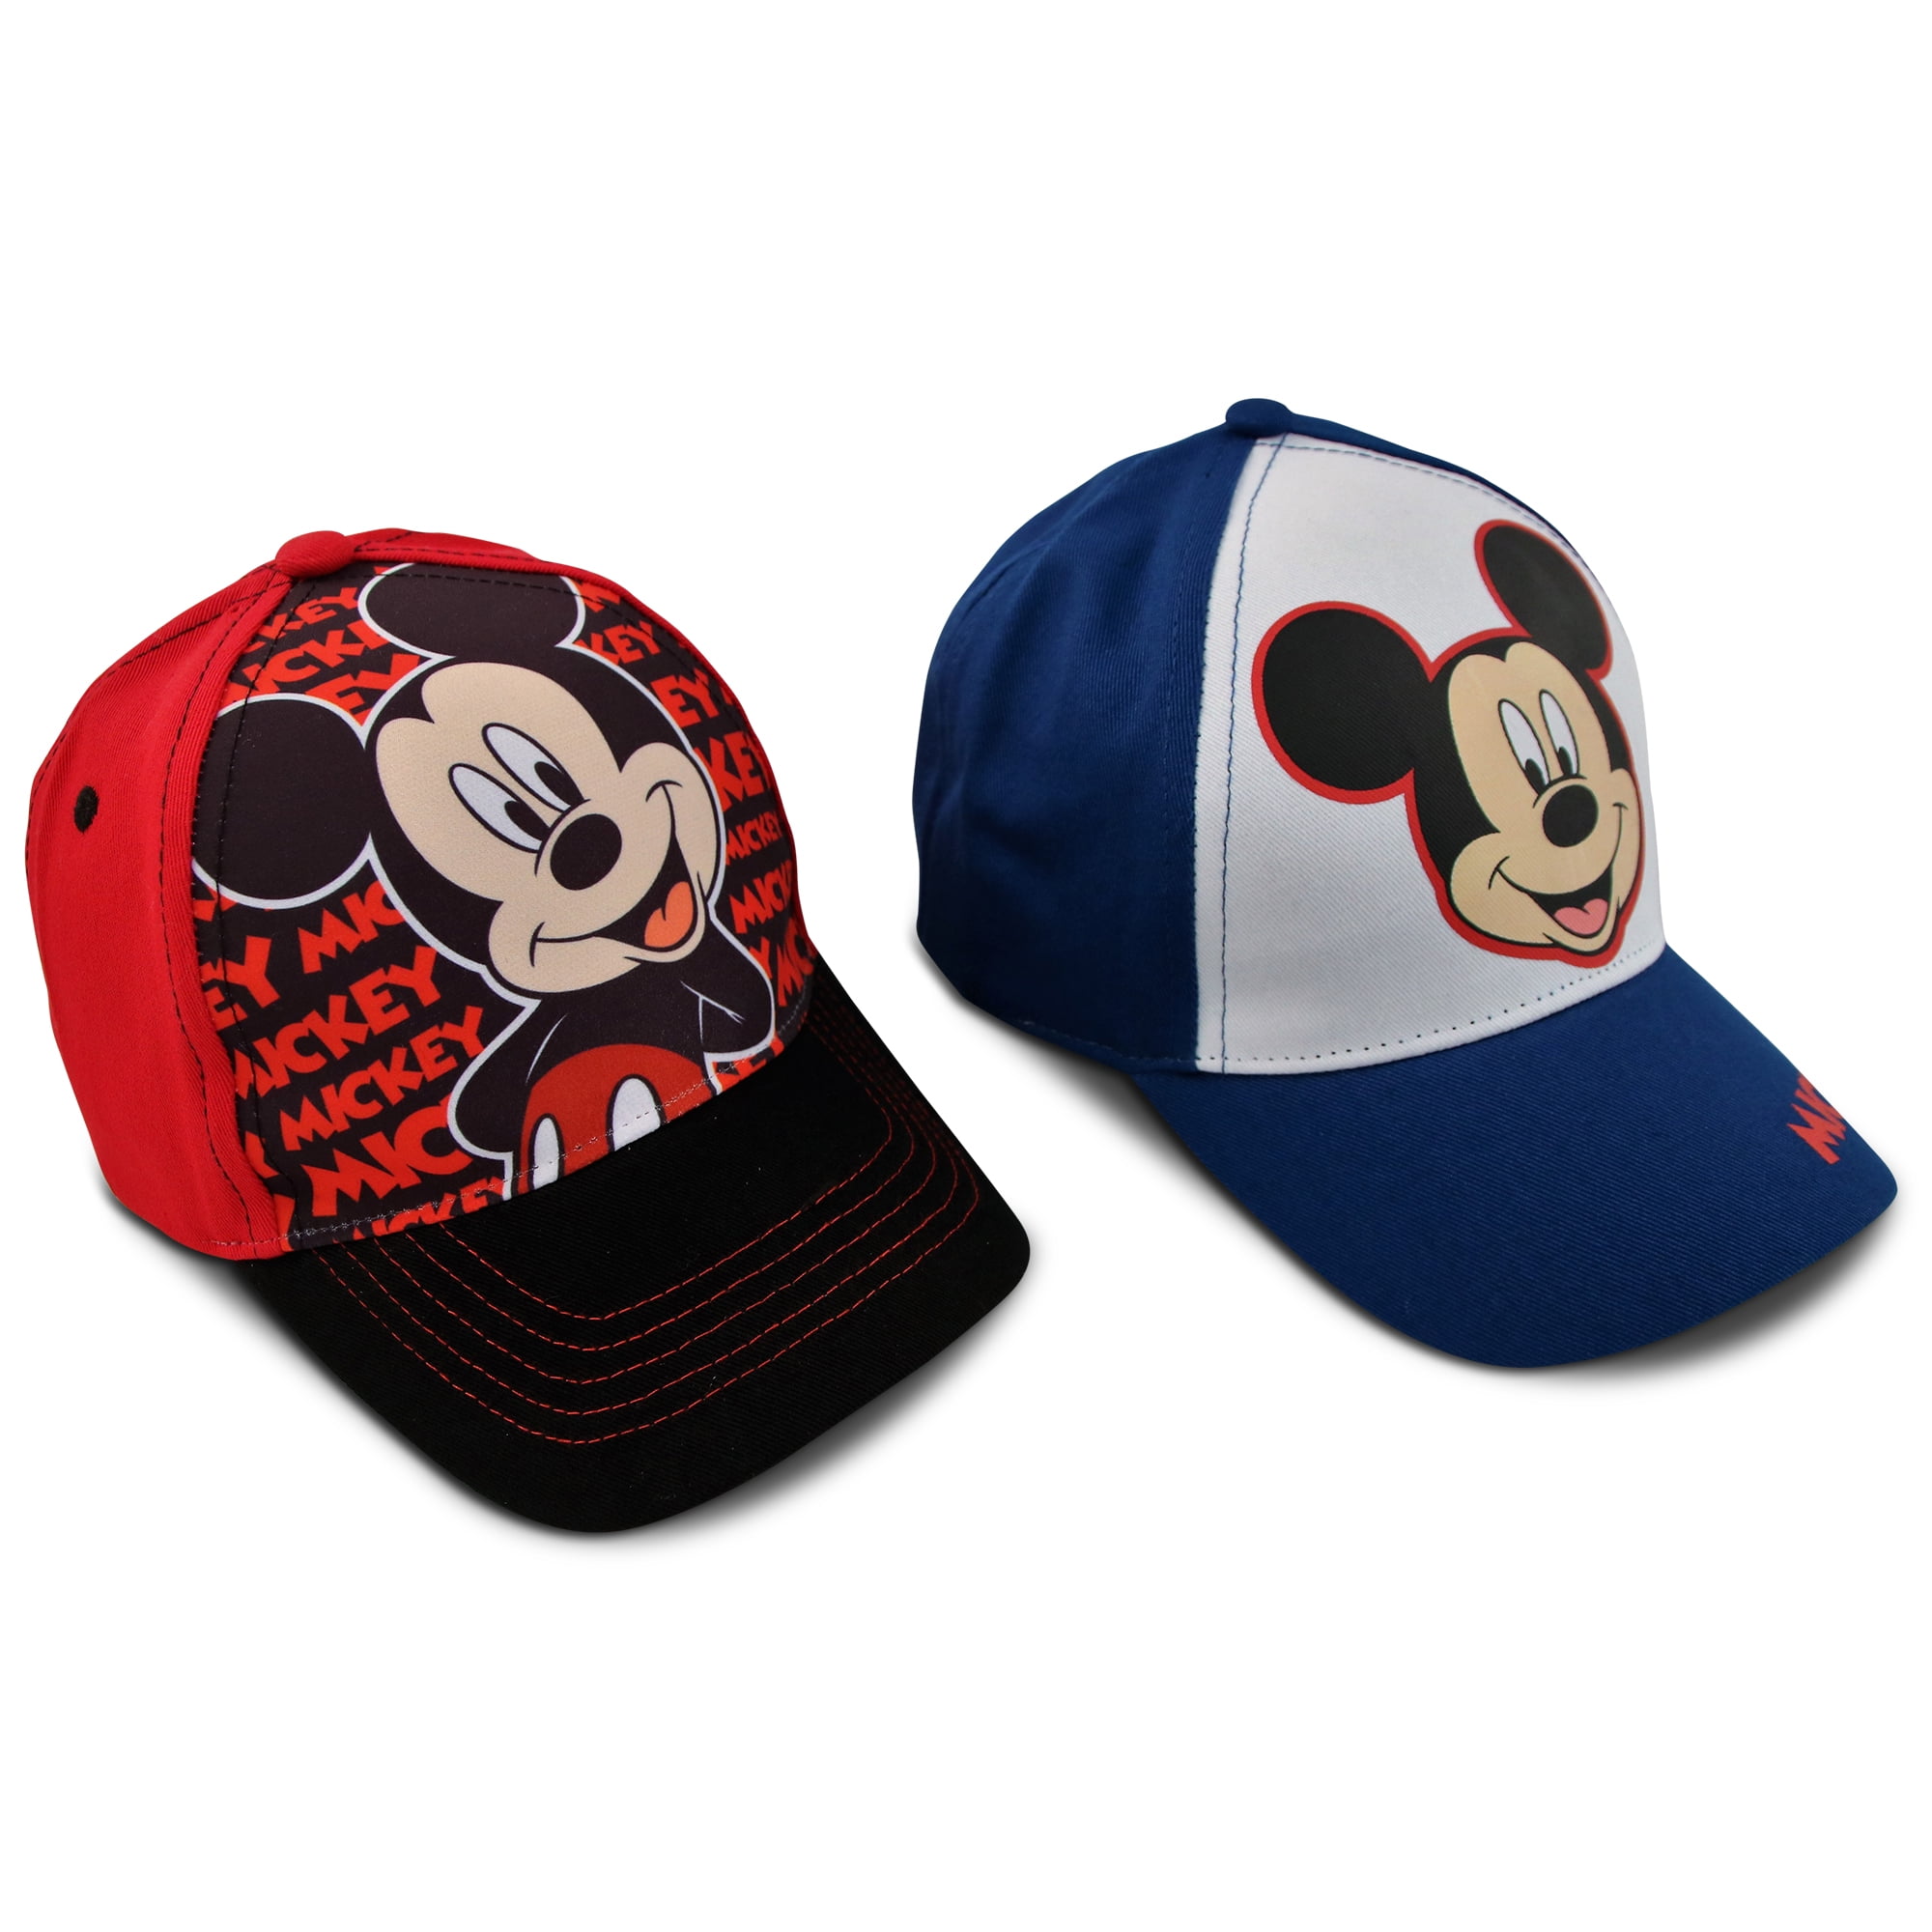 Mickey Mouse Kids Cap Disney Toddler Baseball Hat for Boy’s Ages 2-7 Babysunhat 